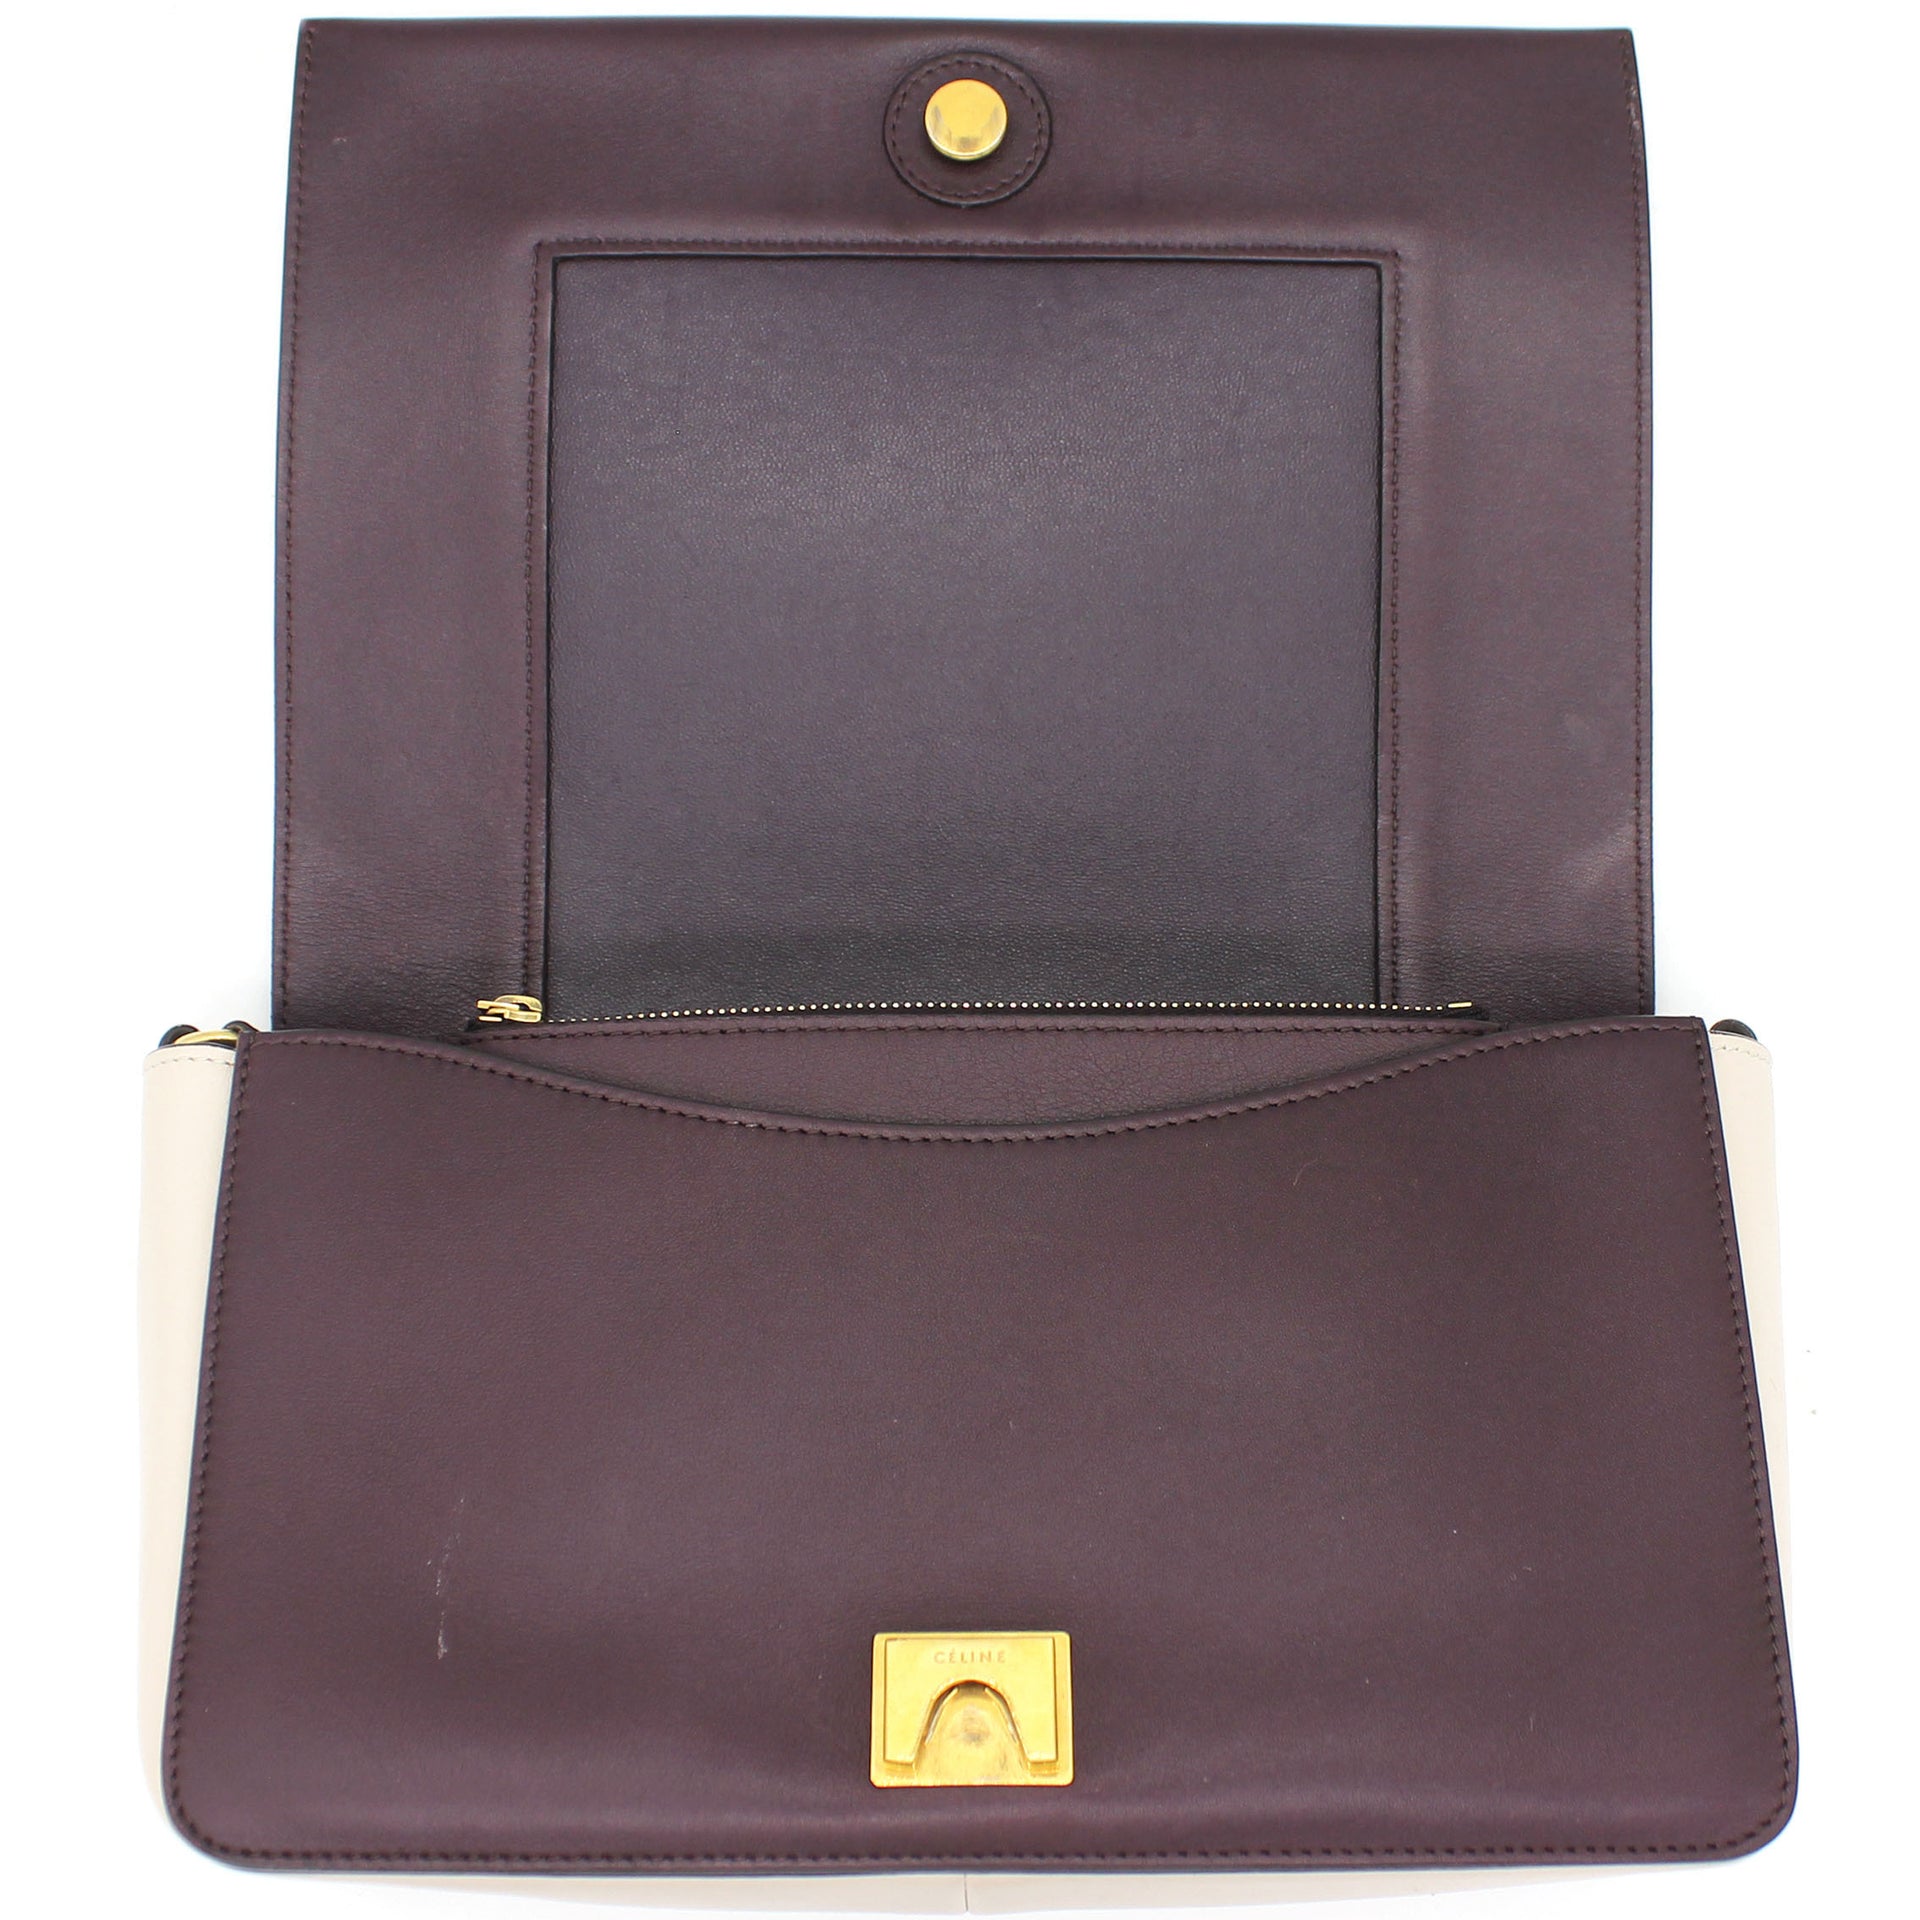 Light Beige/Burgundy Leather Frame Classic Messenger Bag